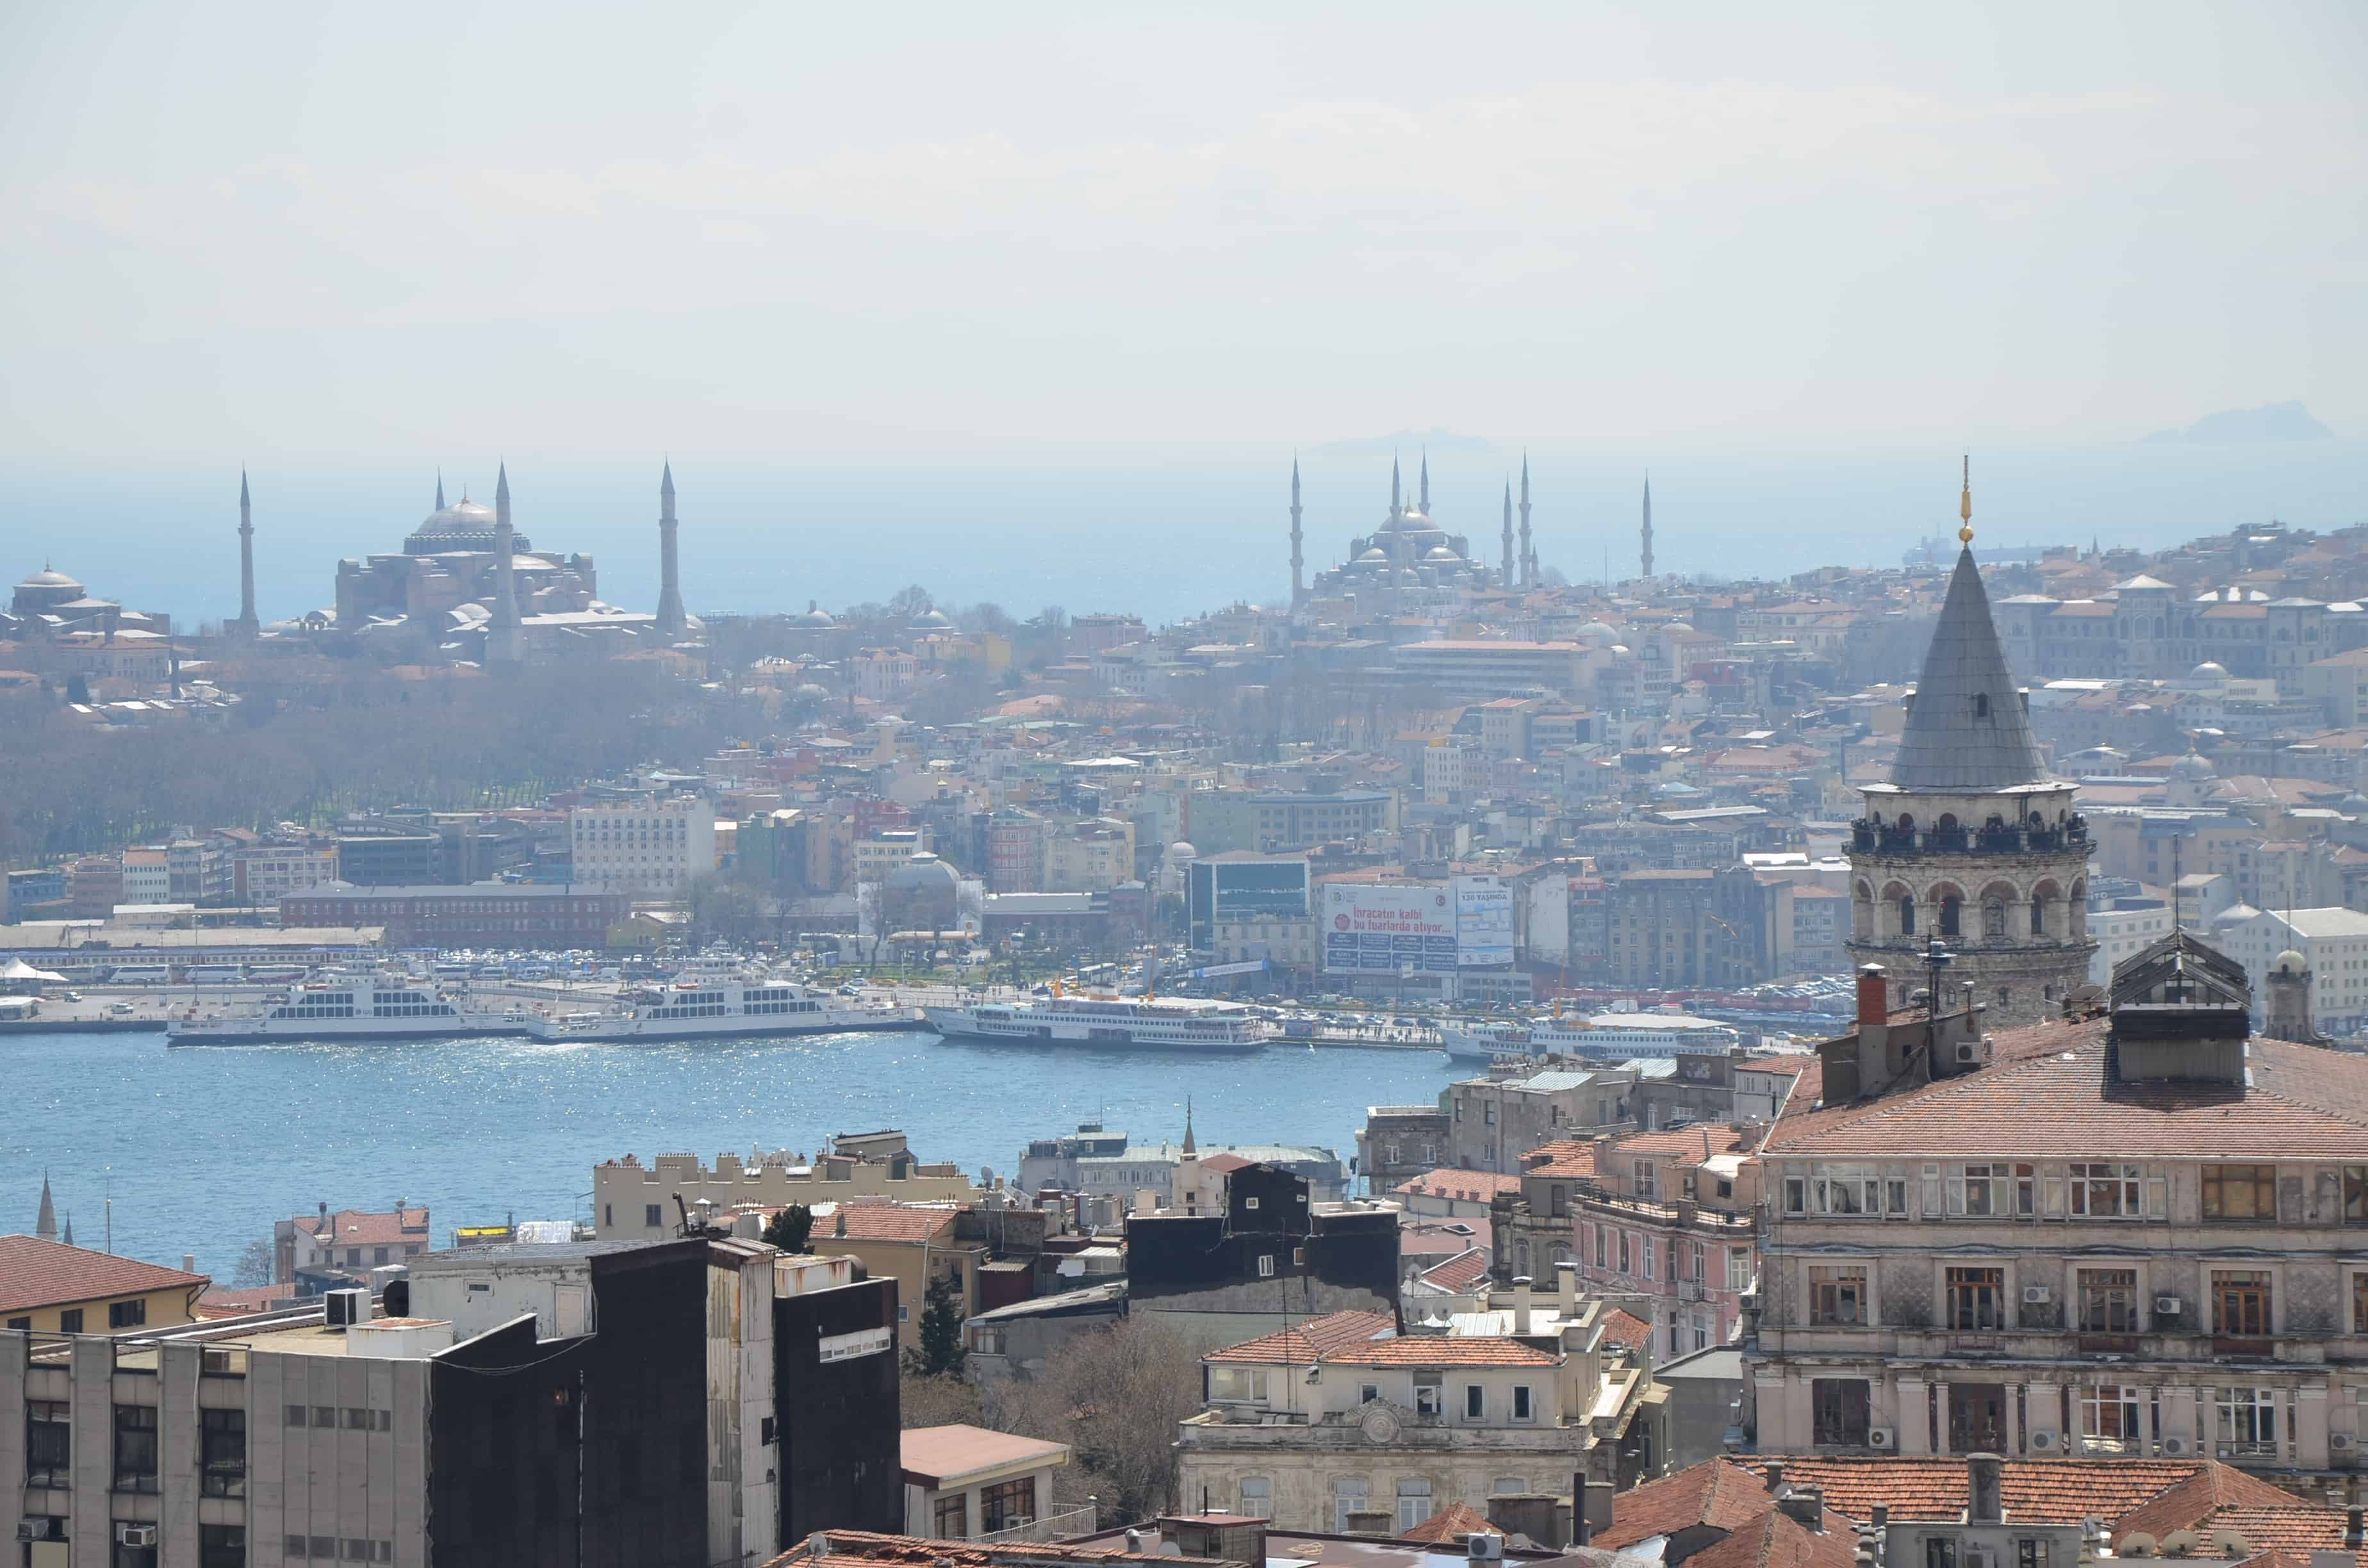 Looking towards the old city from the Marmara Pera in Tepebaşı, Istanbul, Turkey